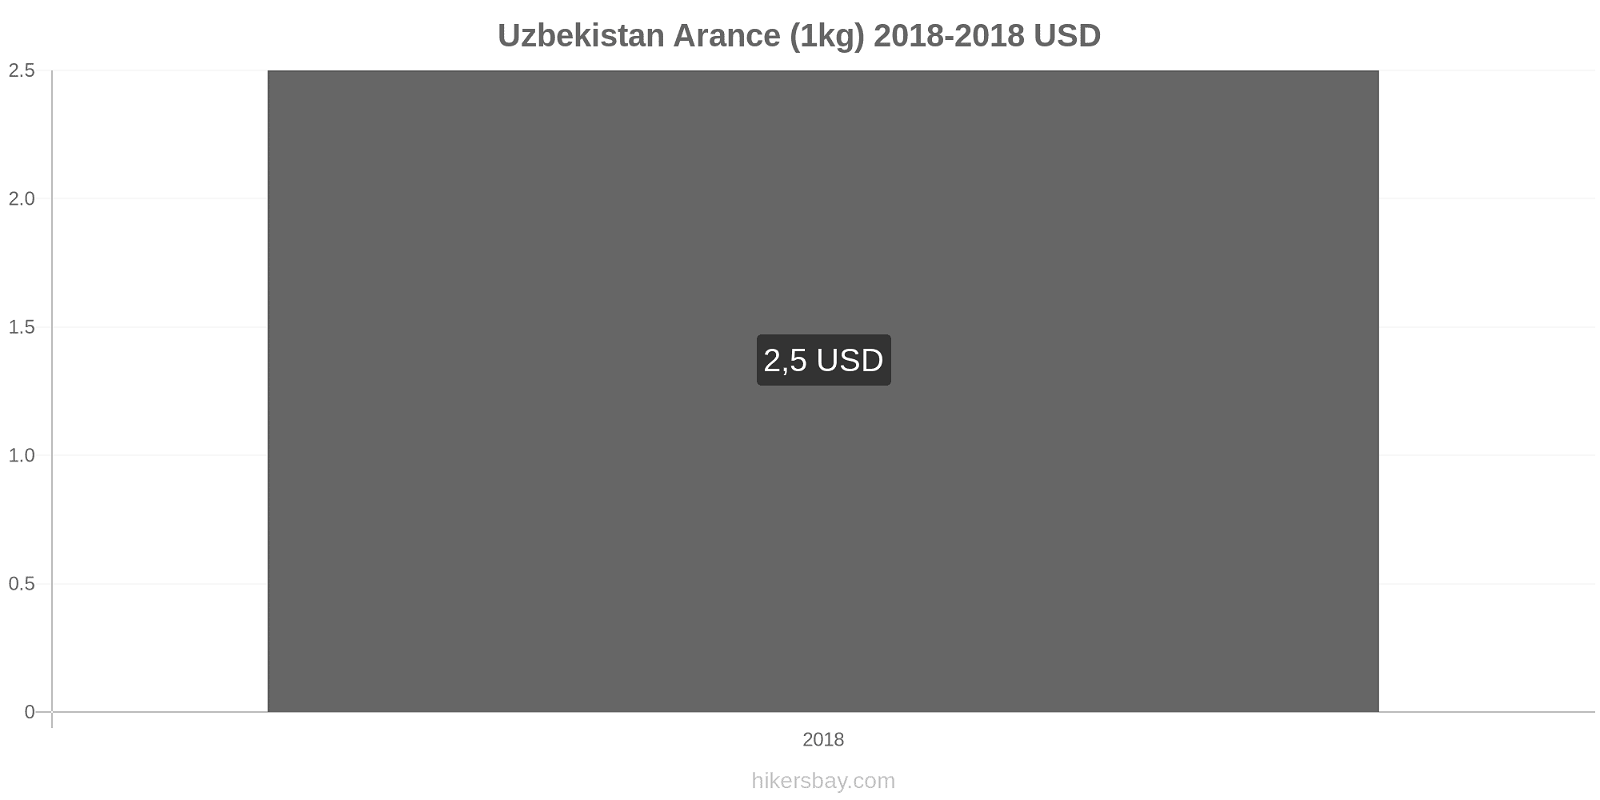 Uzbekistan cambi di prezzo Arance (1kg) hikersbay.com